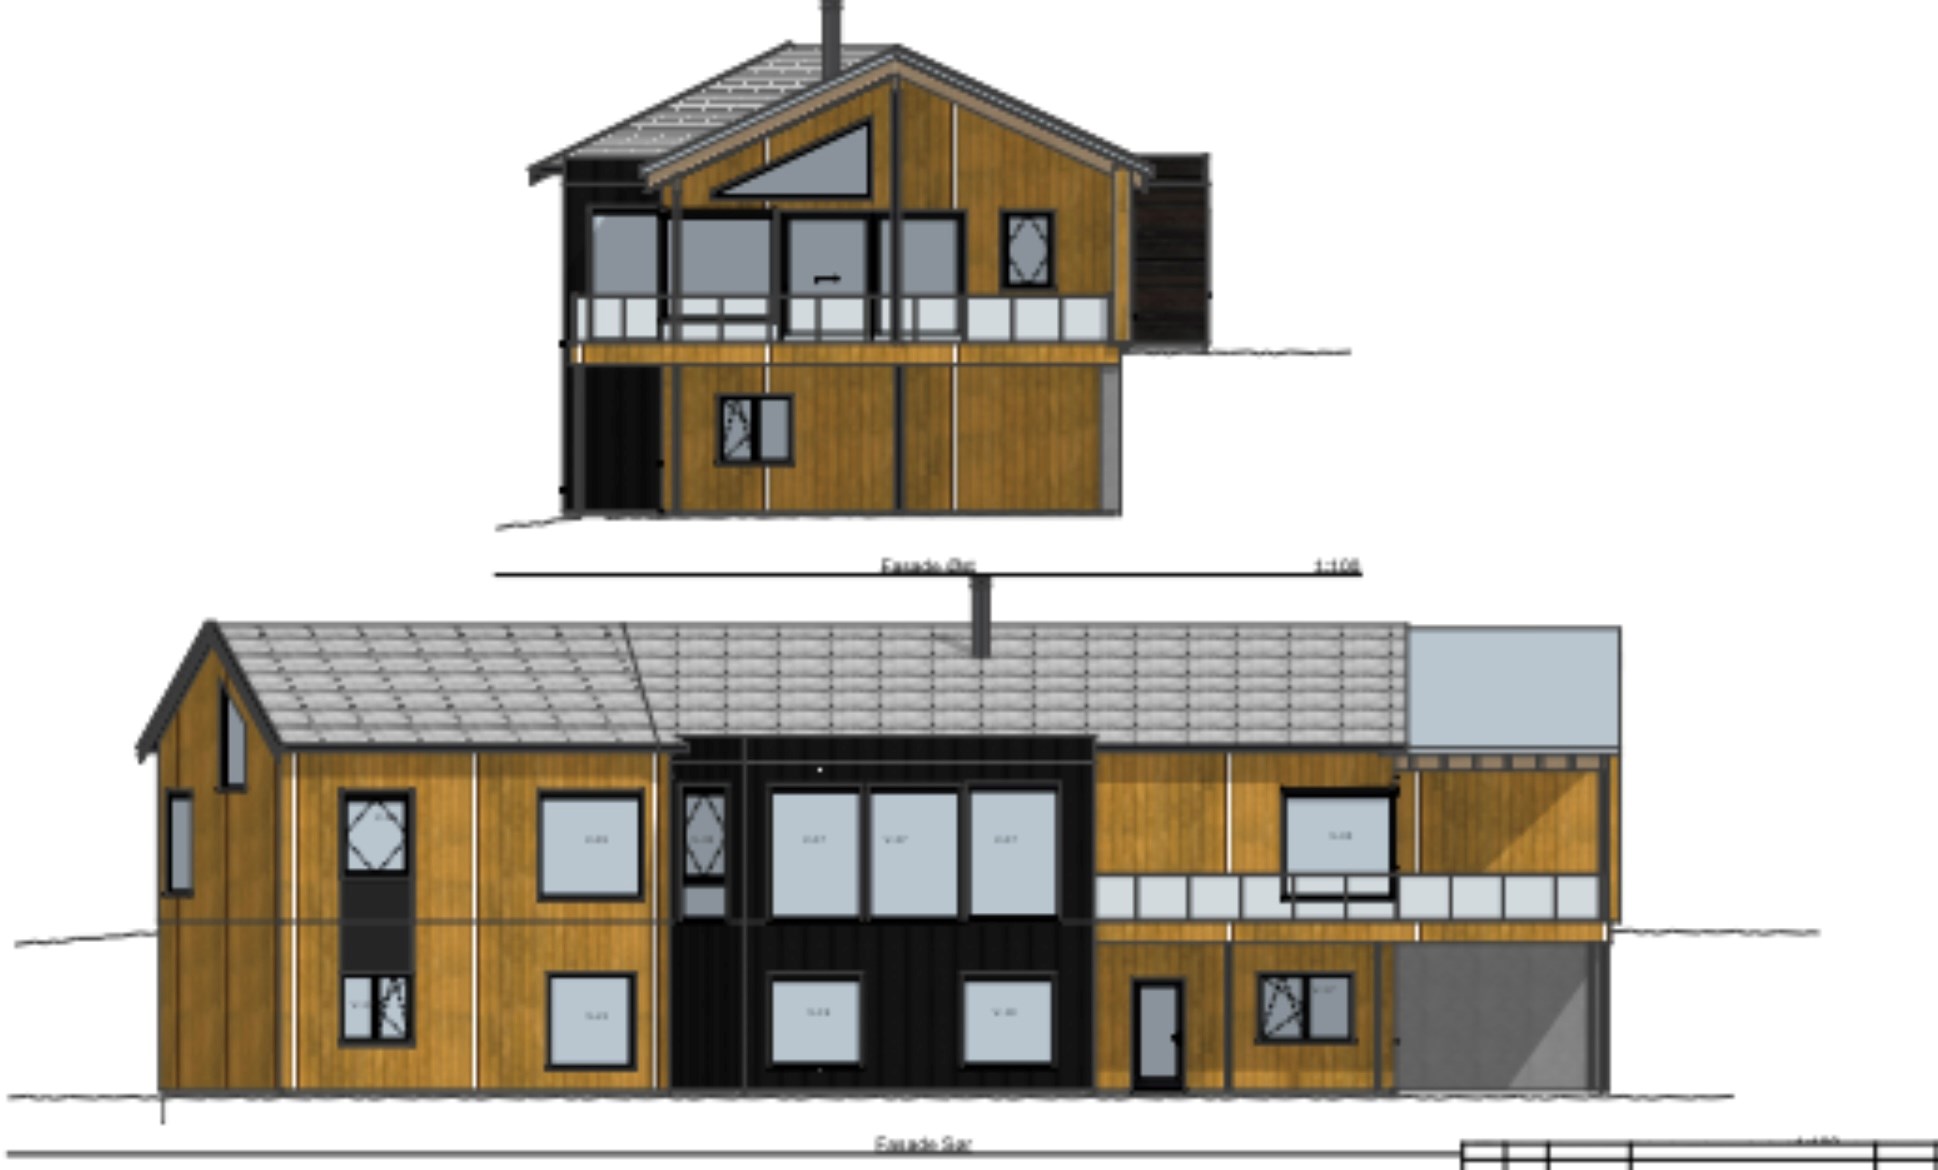 Arkitekttegnet hus ved Randsfjorden - DDE61ADB-4C67-4DDB-A607-9EDCE442AA7A.jpeg - Jonasgustum